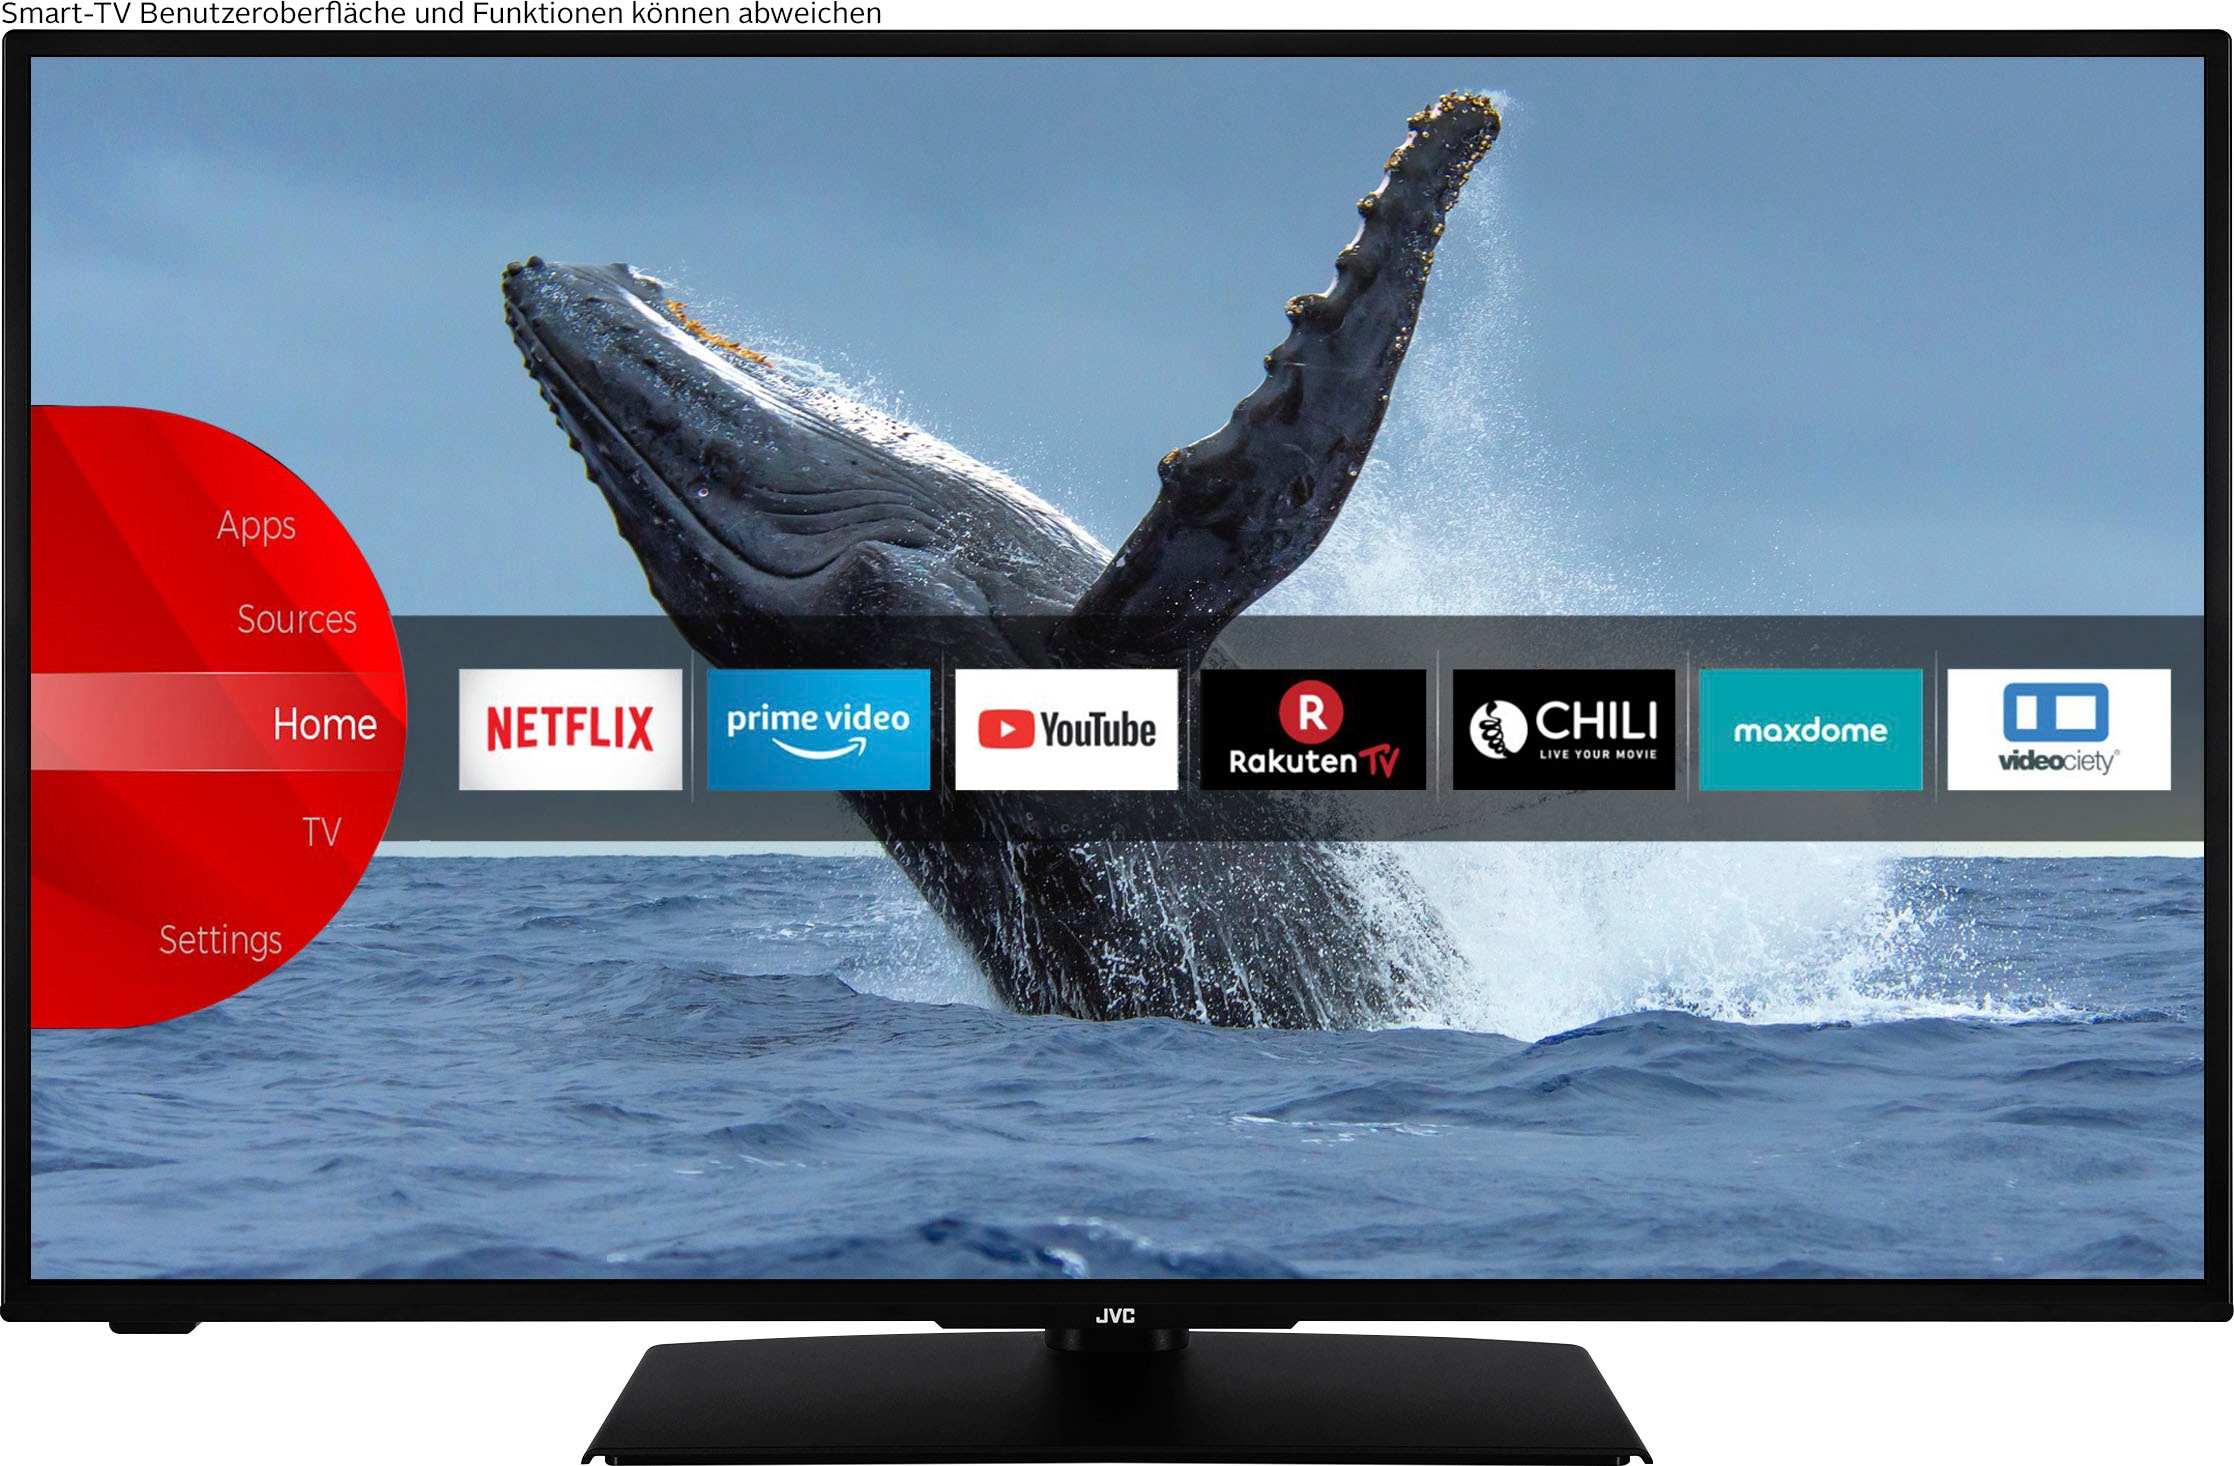 JVC LED-Fernseher, 108 cm/43 Zoll, Full HD, Smart TV, HDR, Triple-Tuner, 6 Monate HD+ inklusive